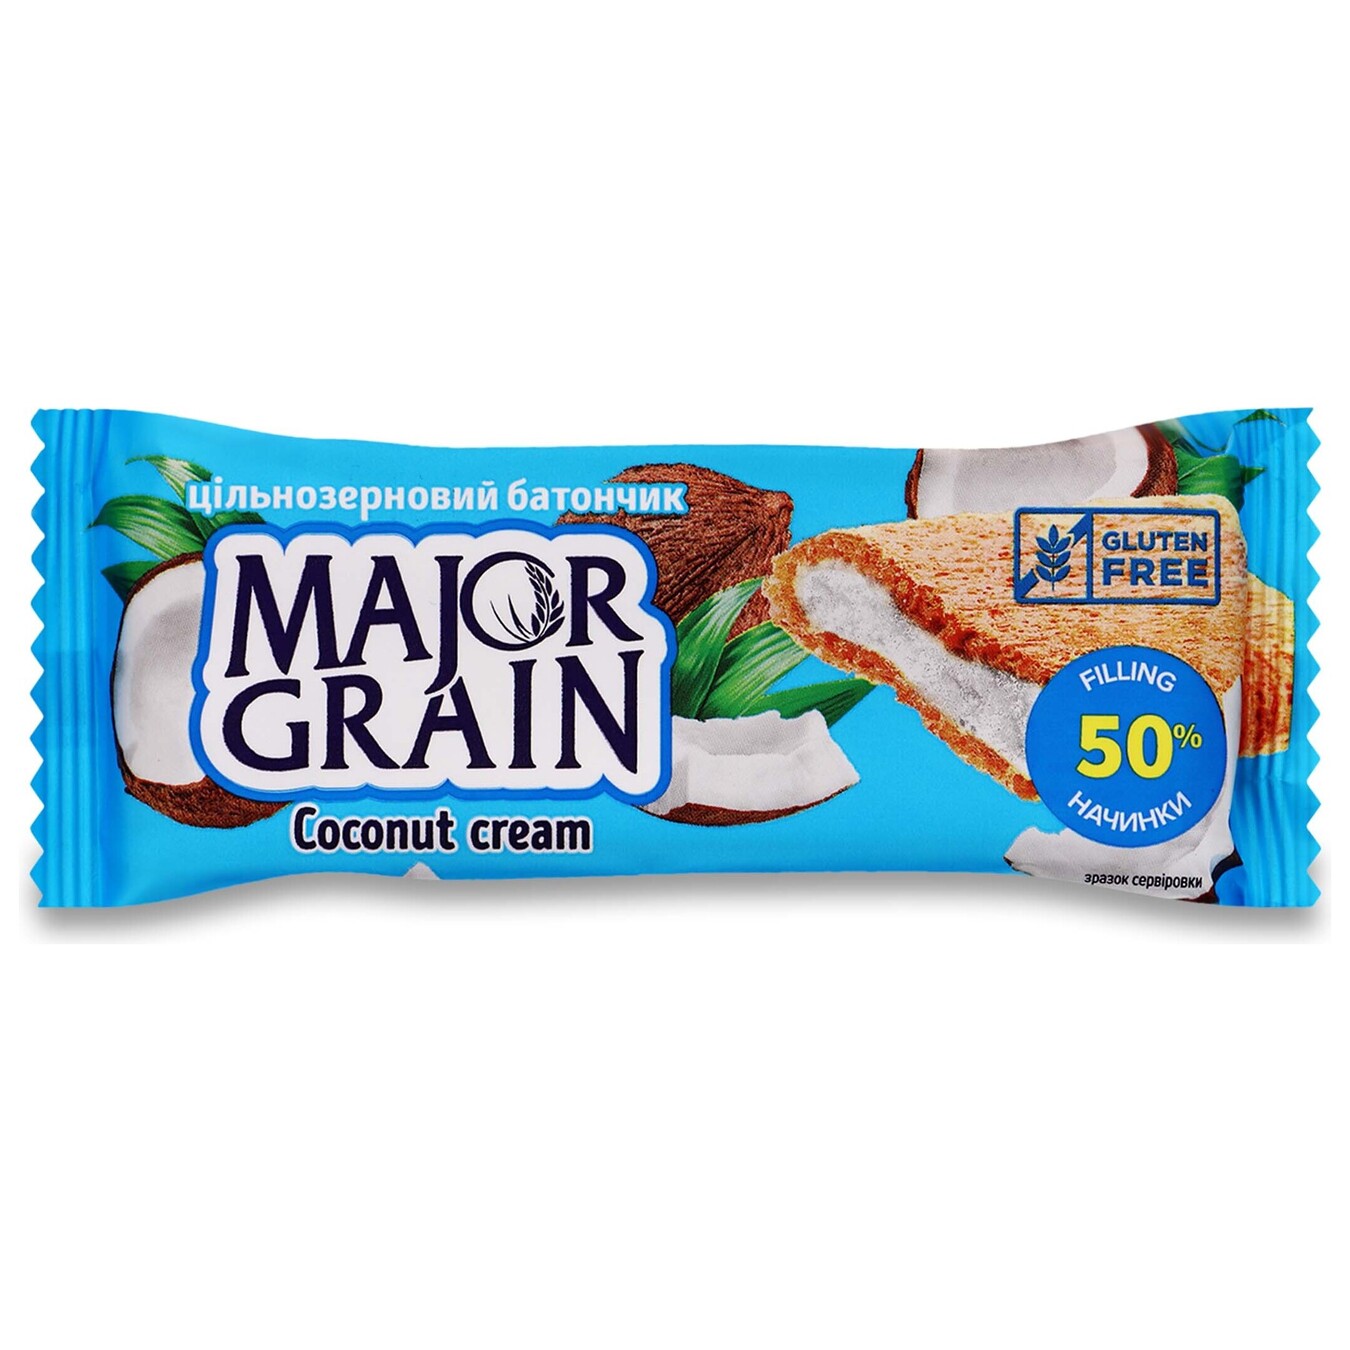 Bar AVK major grain whole grain coconut cream 40g